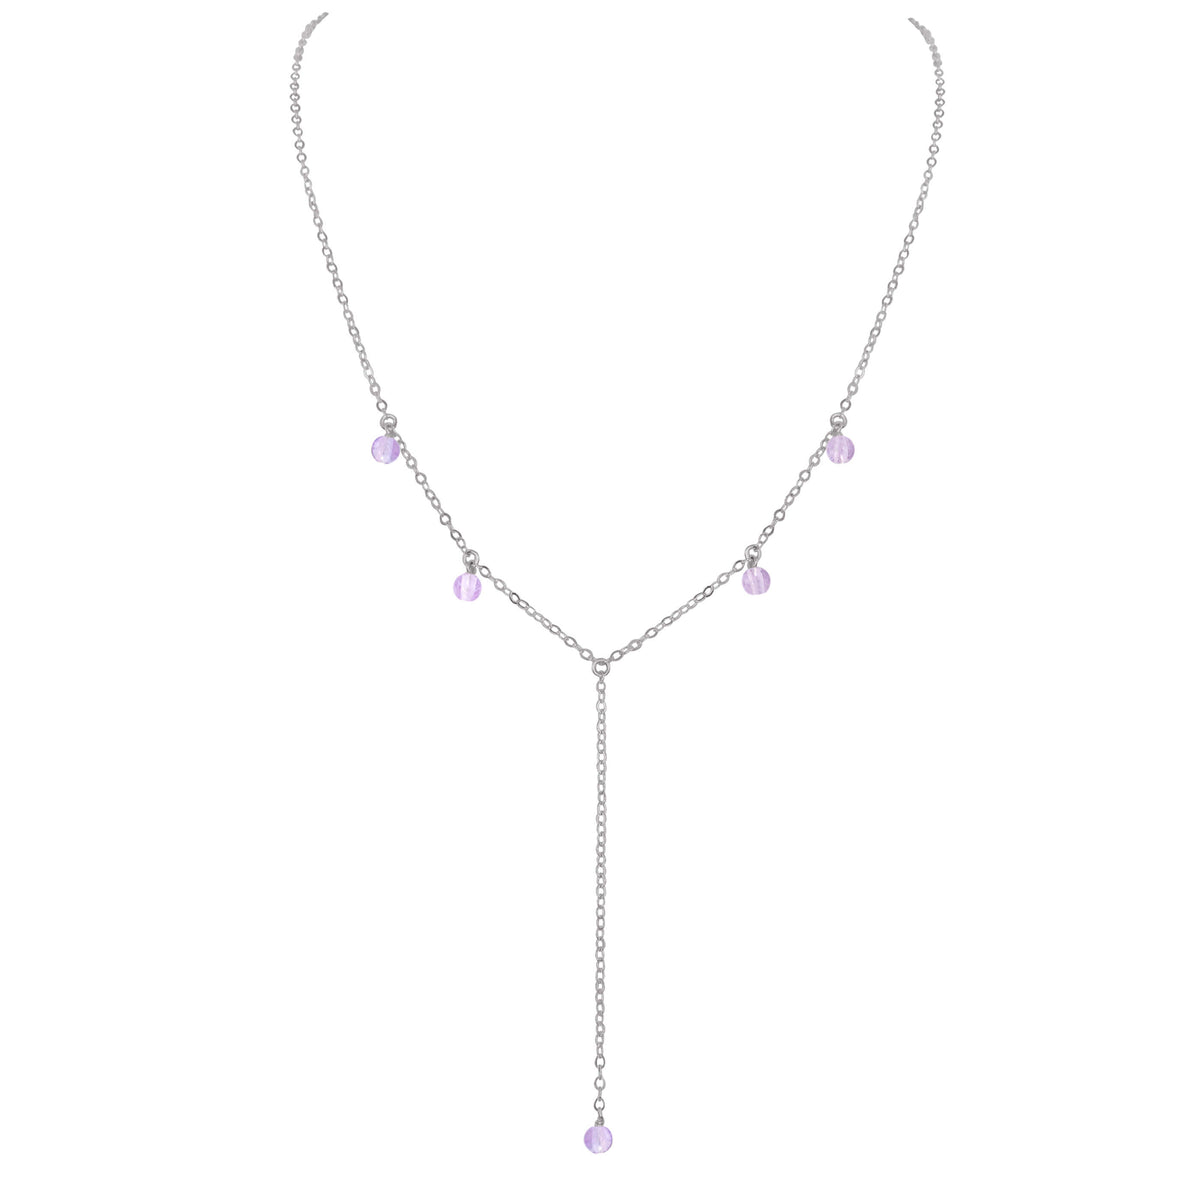 Boho Y Necklace - Lavender Amethyst - Stainless Steel - Luna Tide Handmade Jewellery